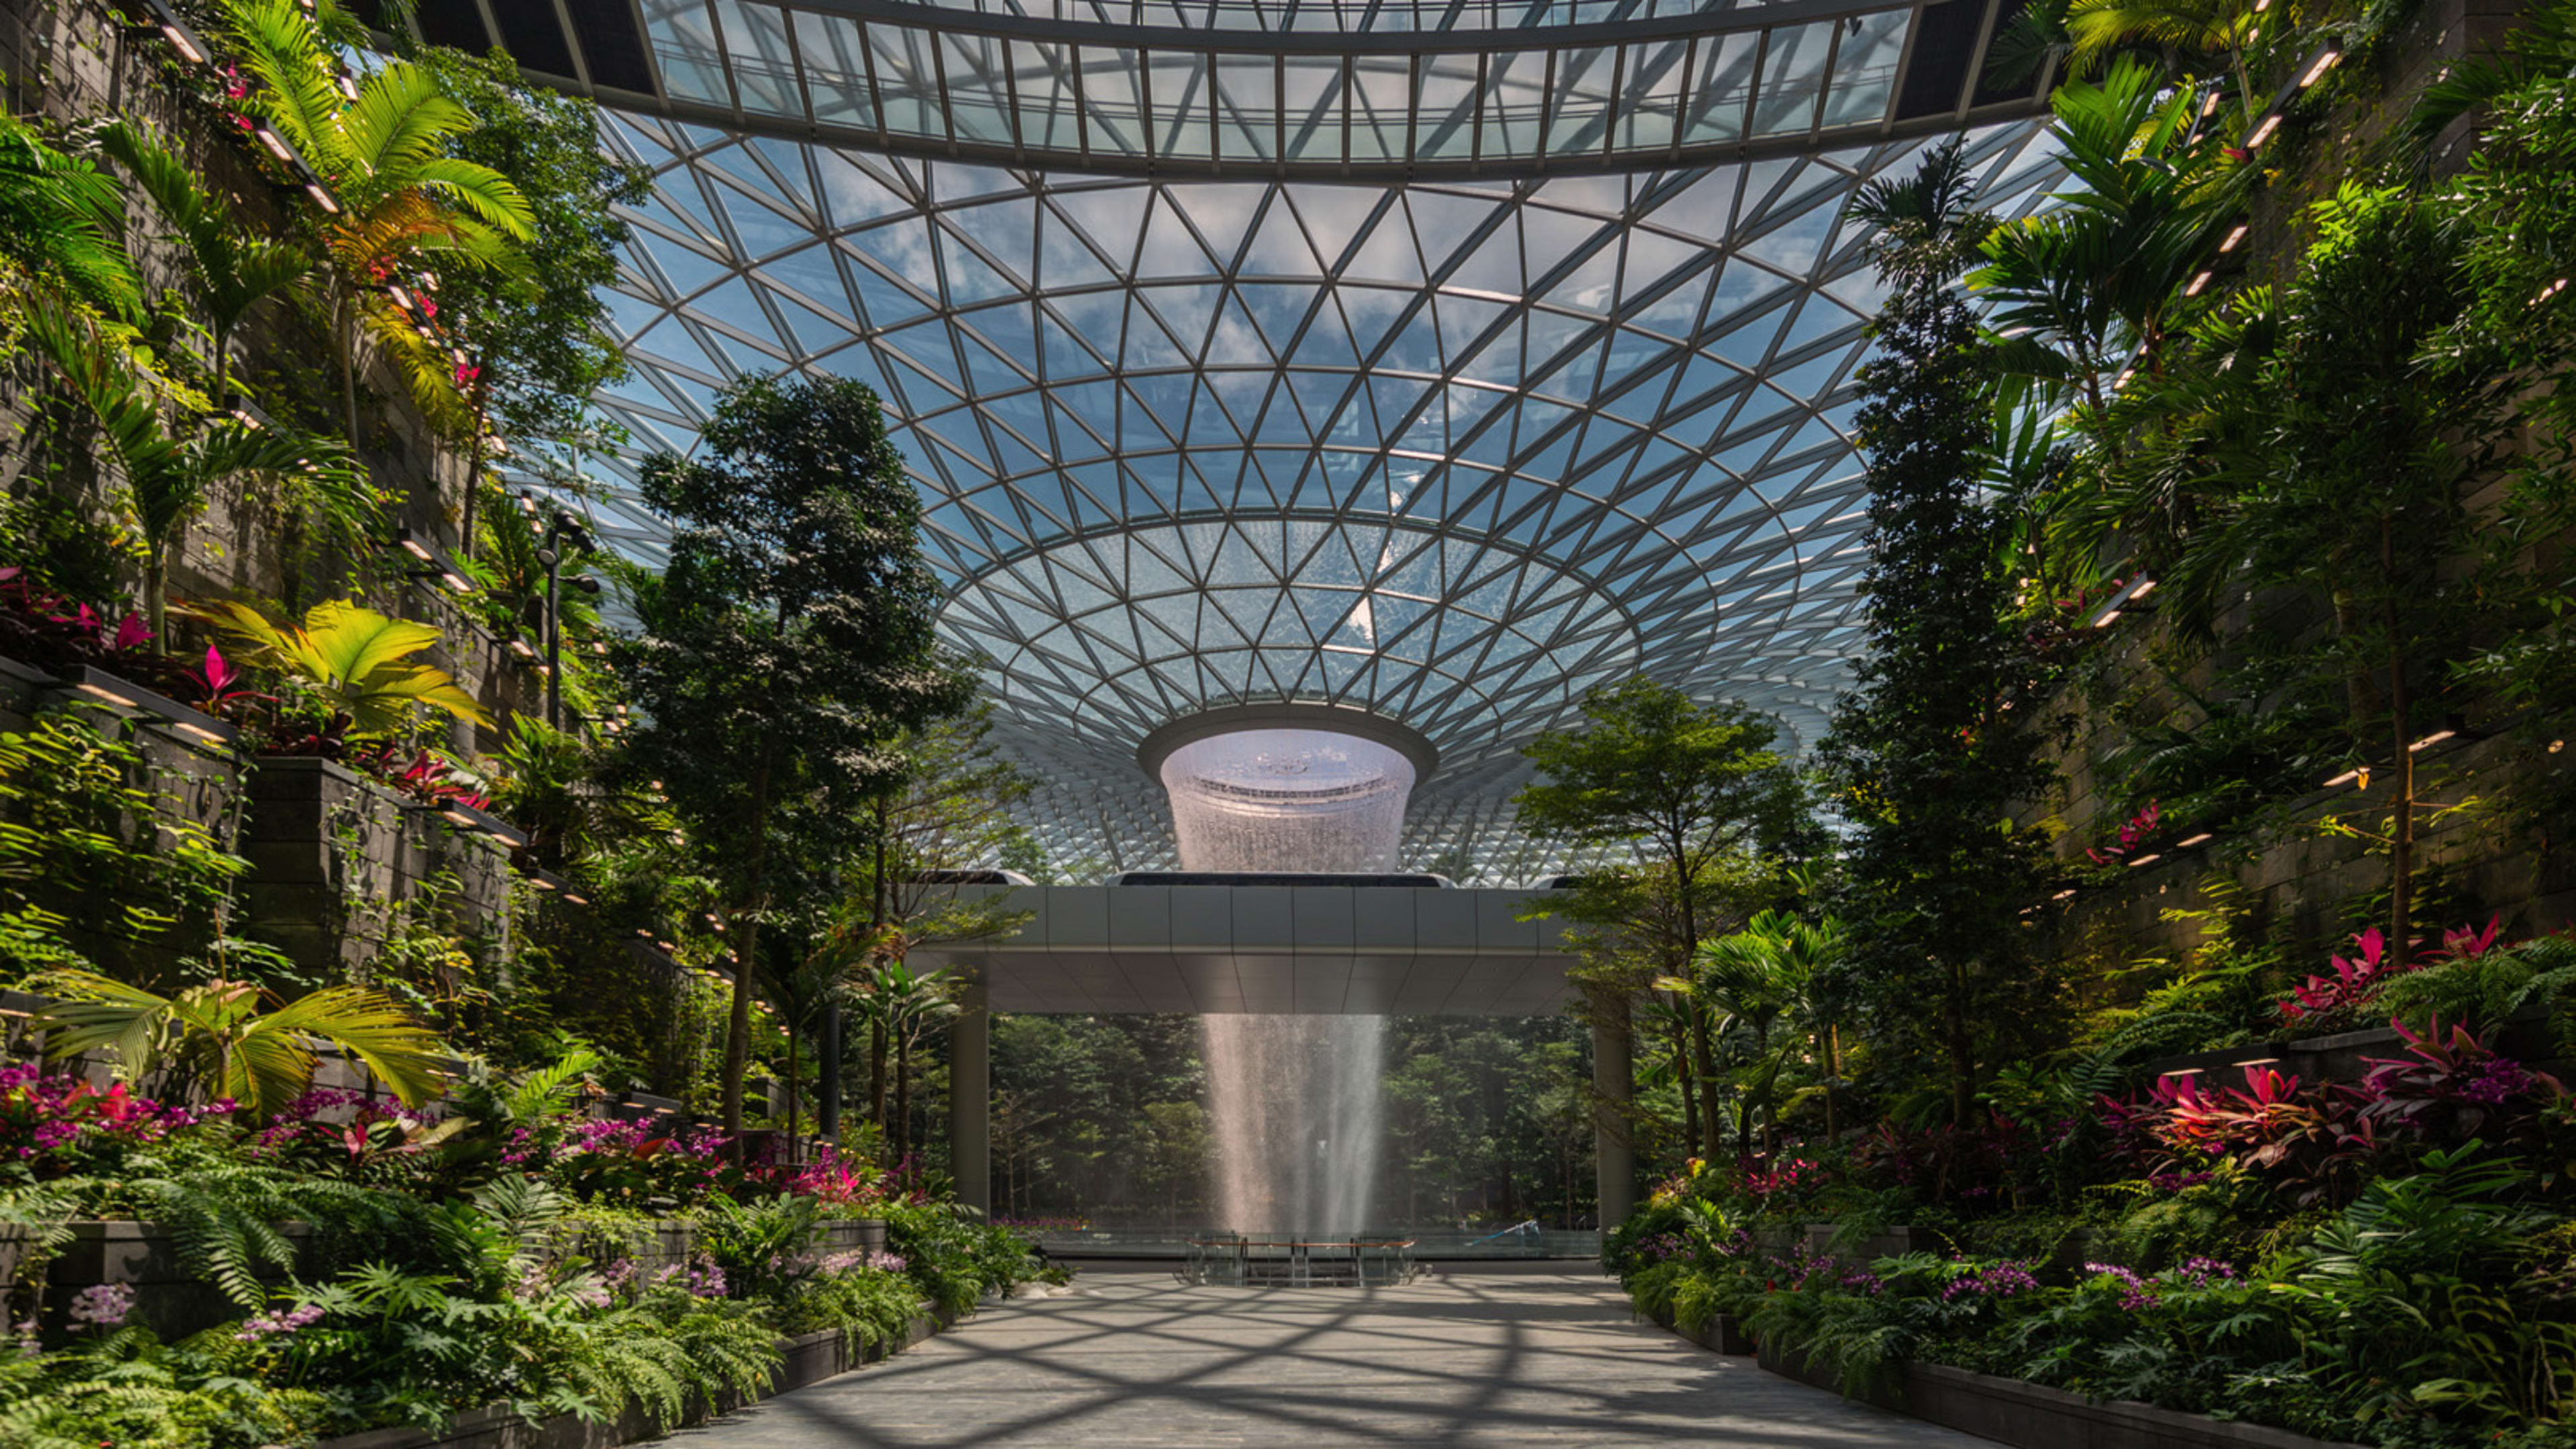 Singapore’s $1.3 billion airport expansion is half botanical garden, half mega-mall